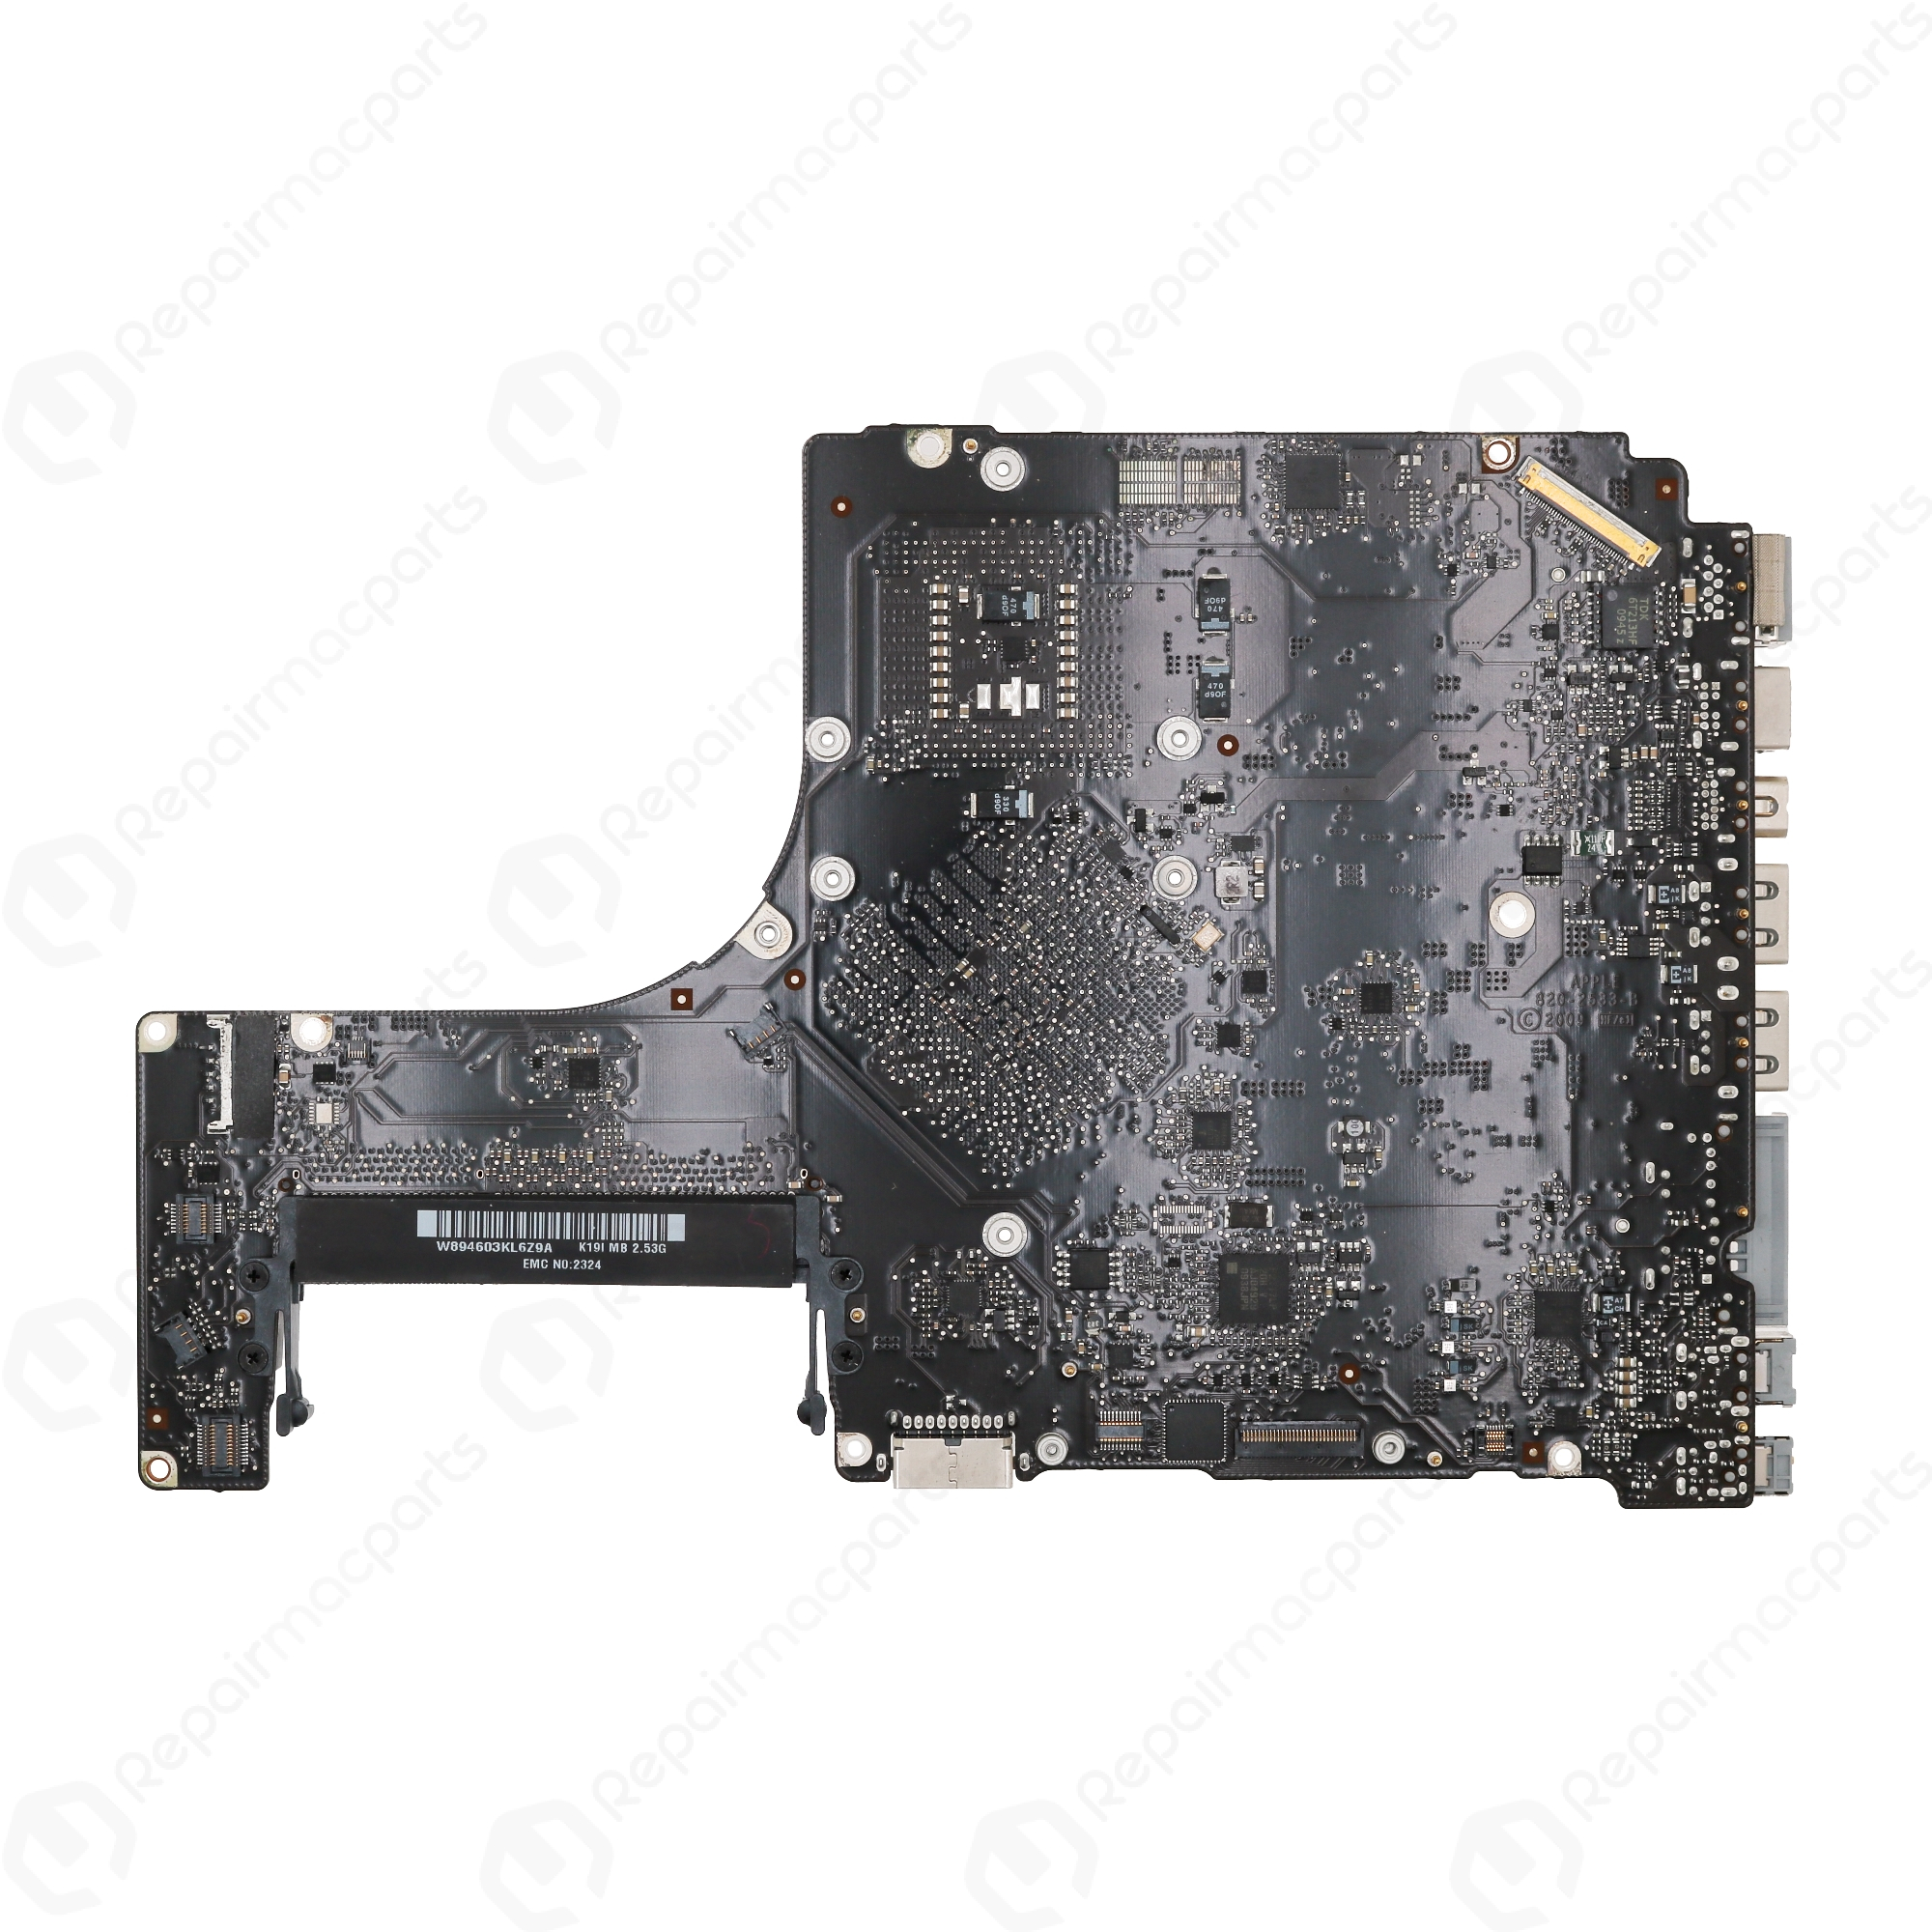 Barrette mémoire RAM 2 Go PC3-8500 MacBook / MacBook Pro - Apple